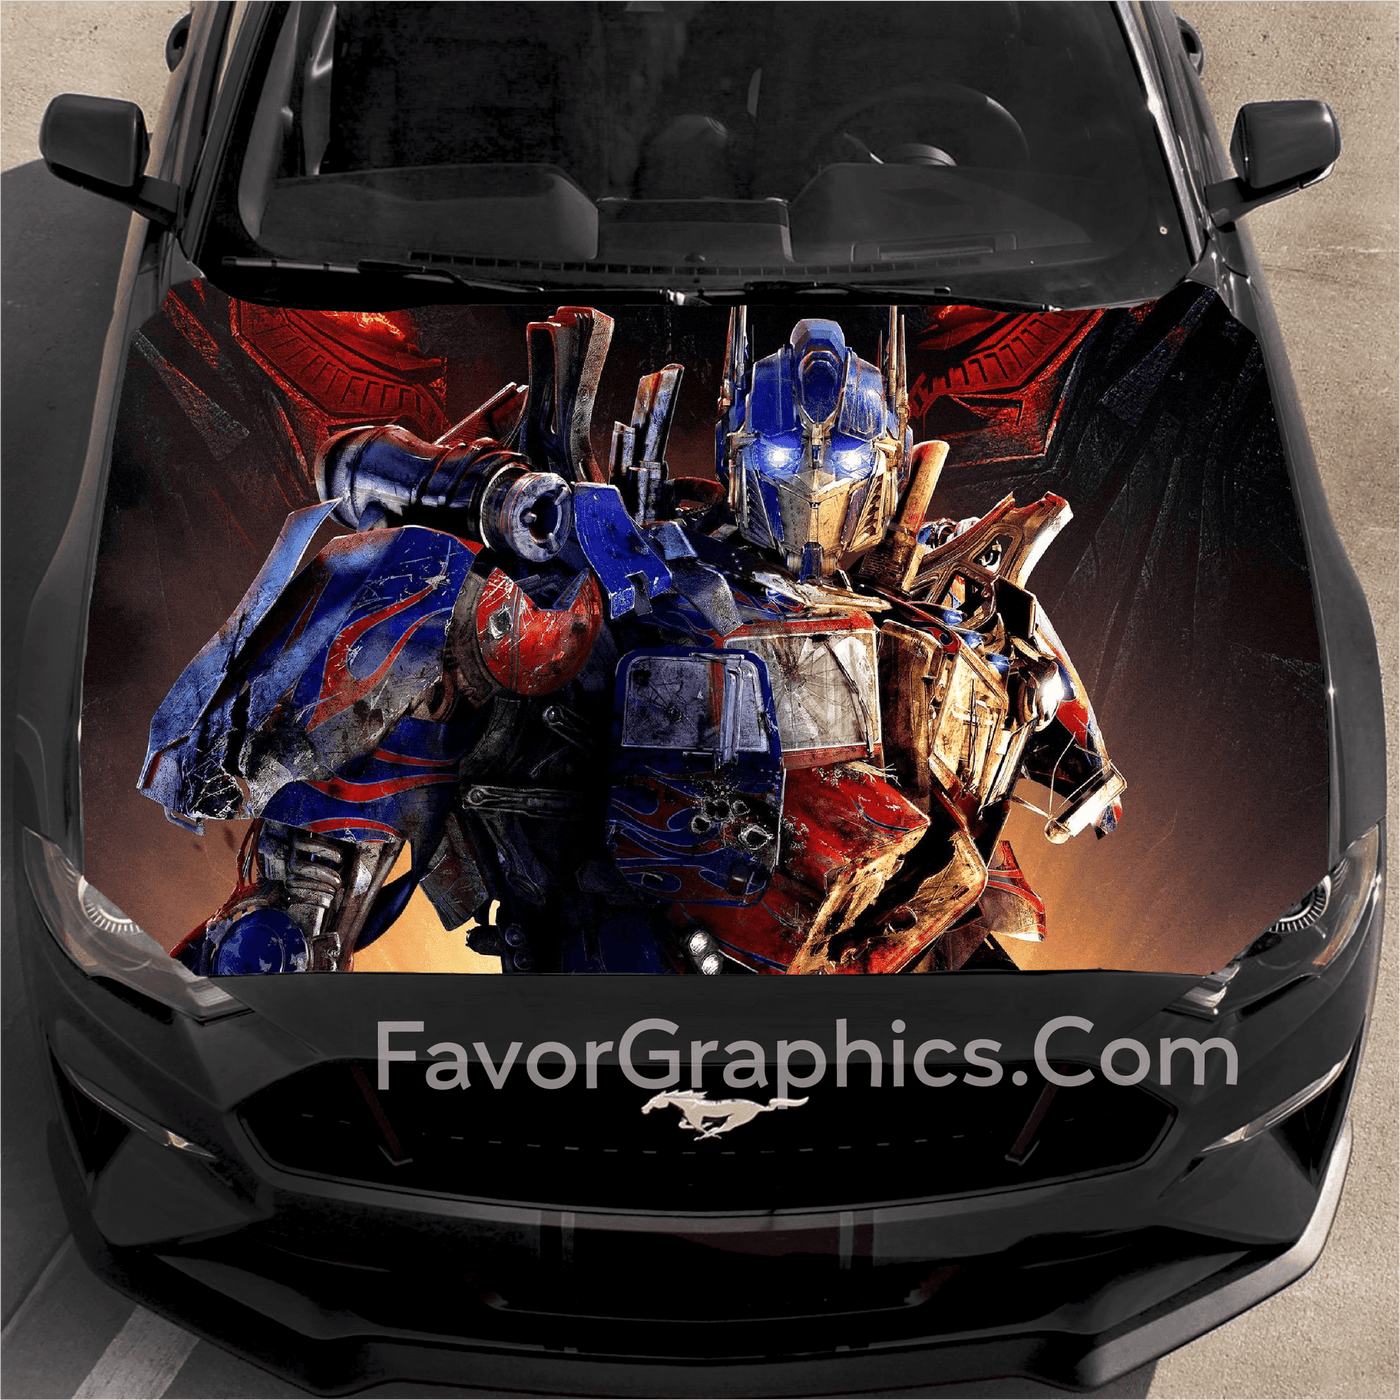 Optimus Prime Transformers Car Decal Sticker Vinyl Hood Wrap High-Quality Graphics